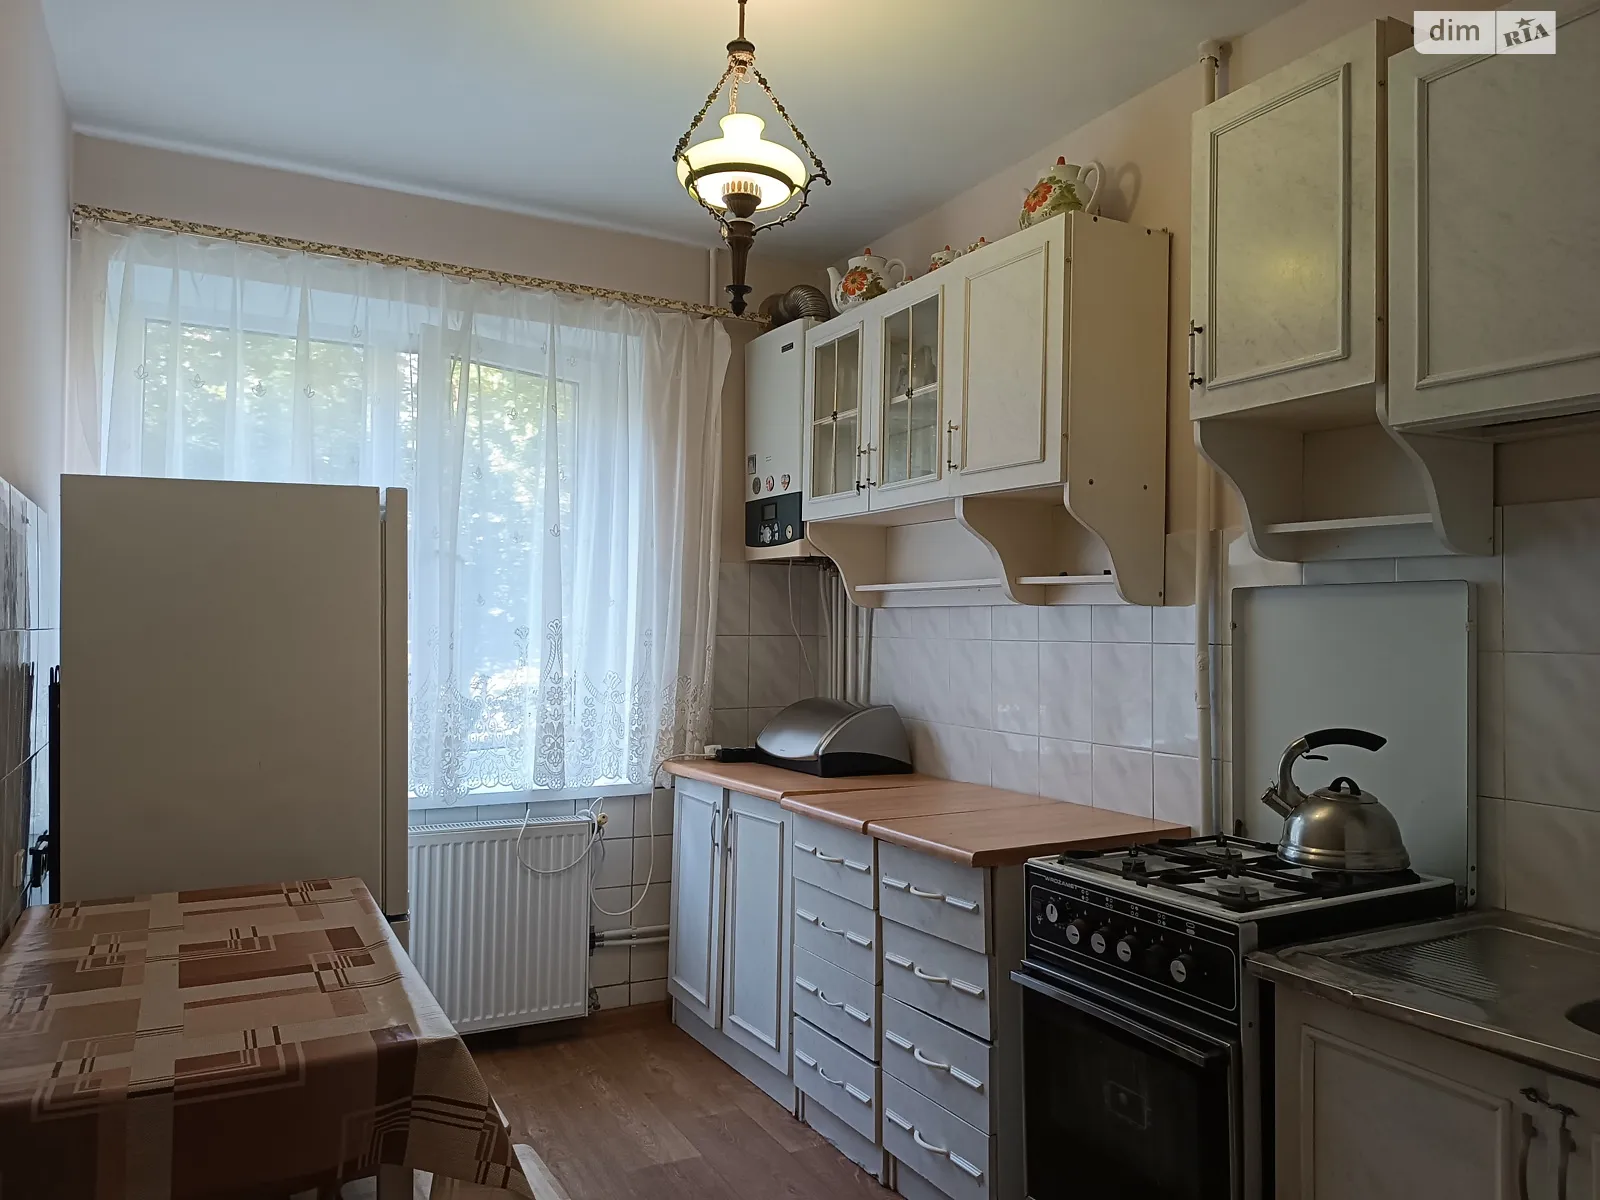 3-кімнатна квартира 68 кв. м у Тернополі, цена: 195 $ - фото 1